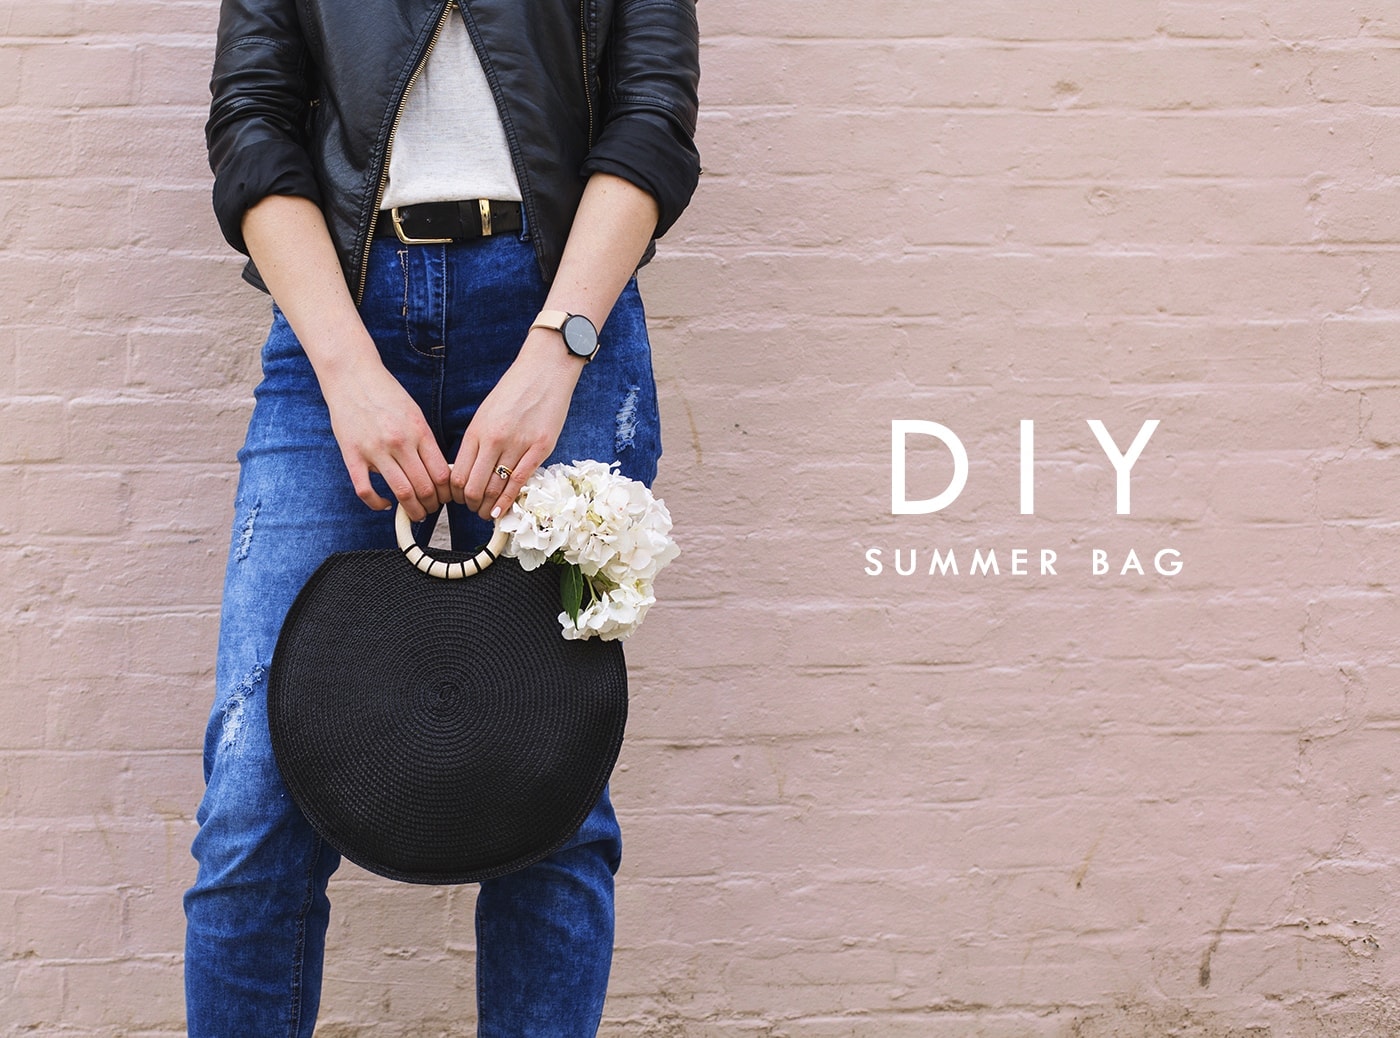 diy placemat summer bag tutorial | easy craft ideas